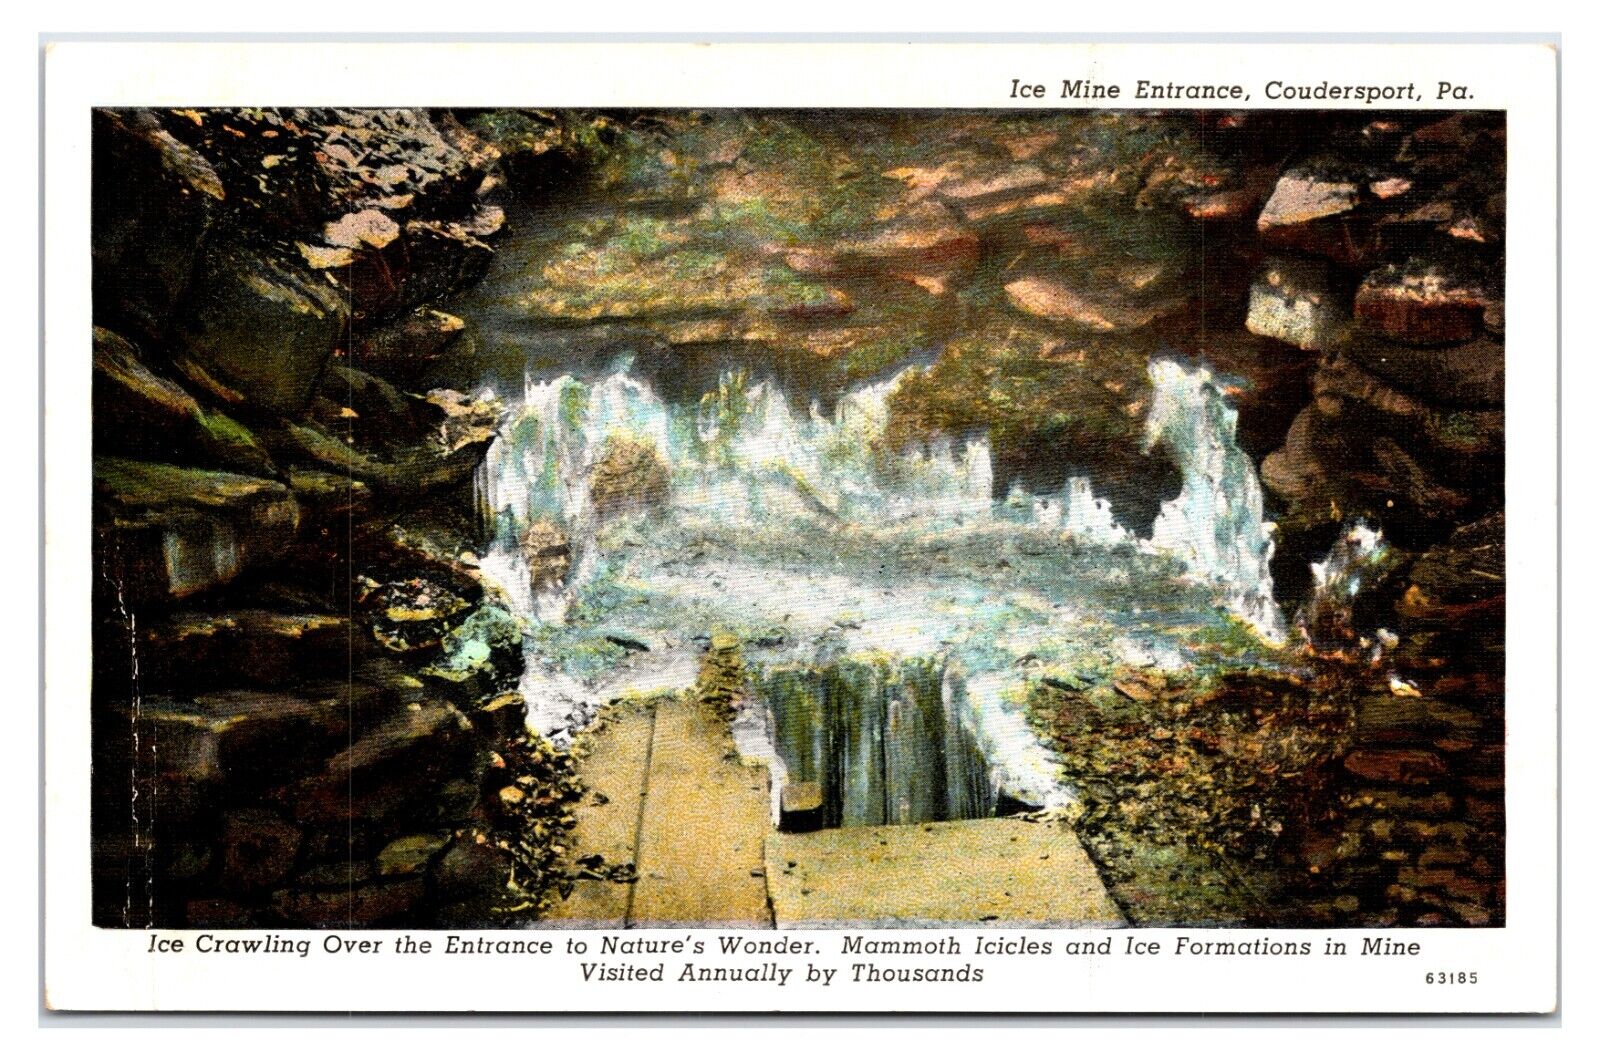 VTG 1930s - Ice Mine Entrance - Coudersport Pennsylvania Postcard (UnPosted)